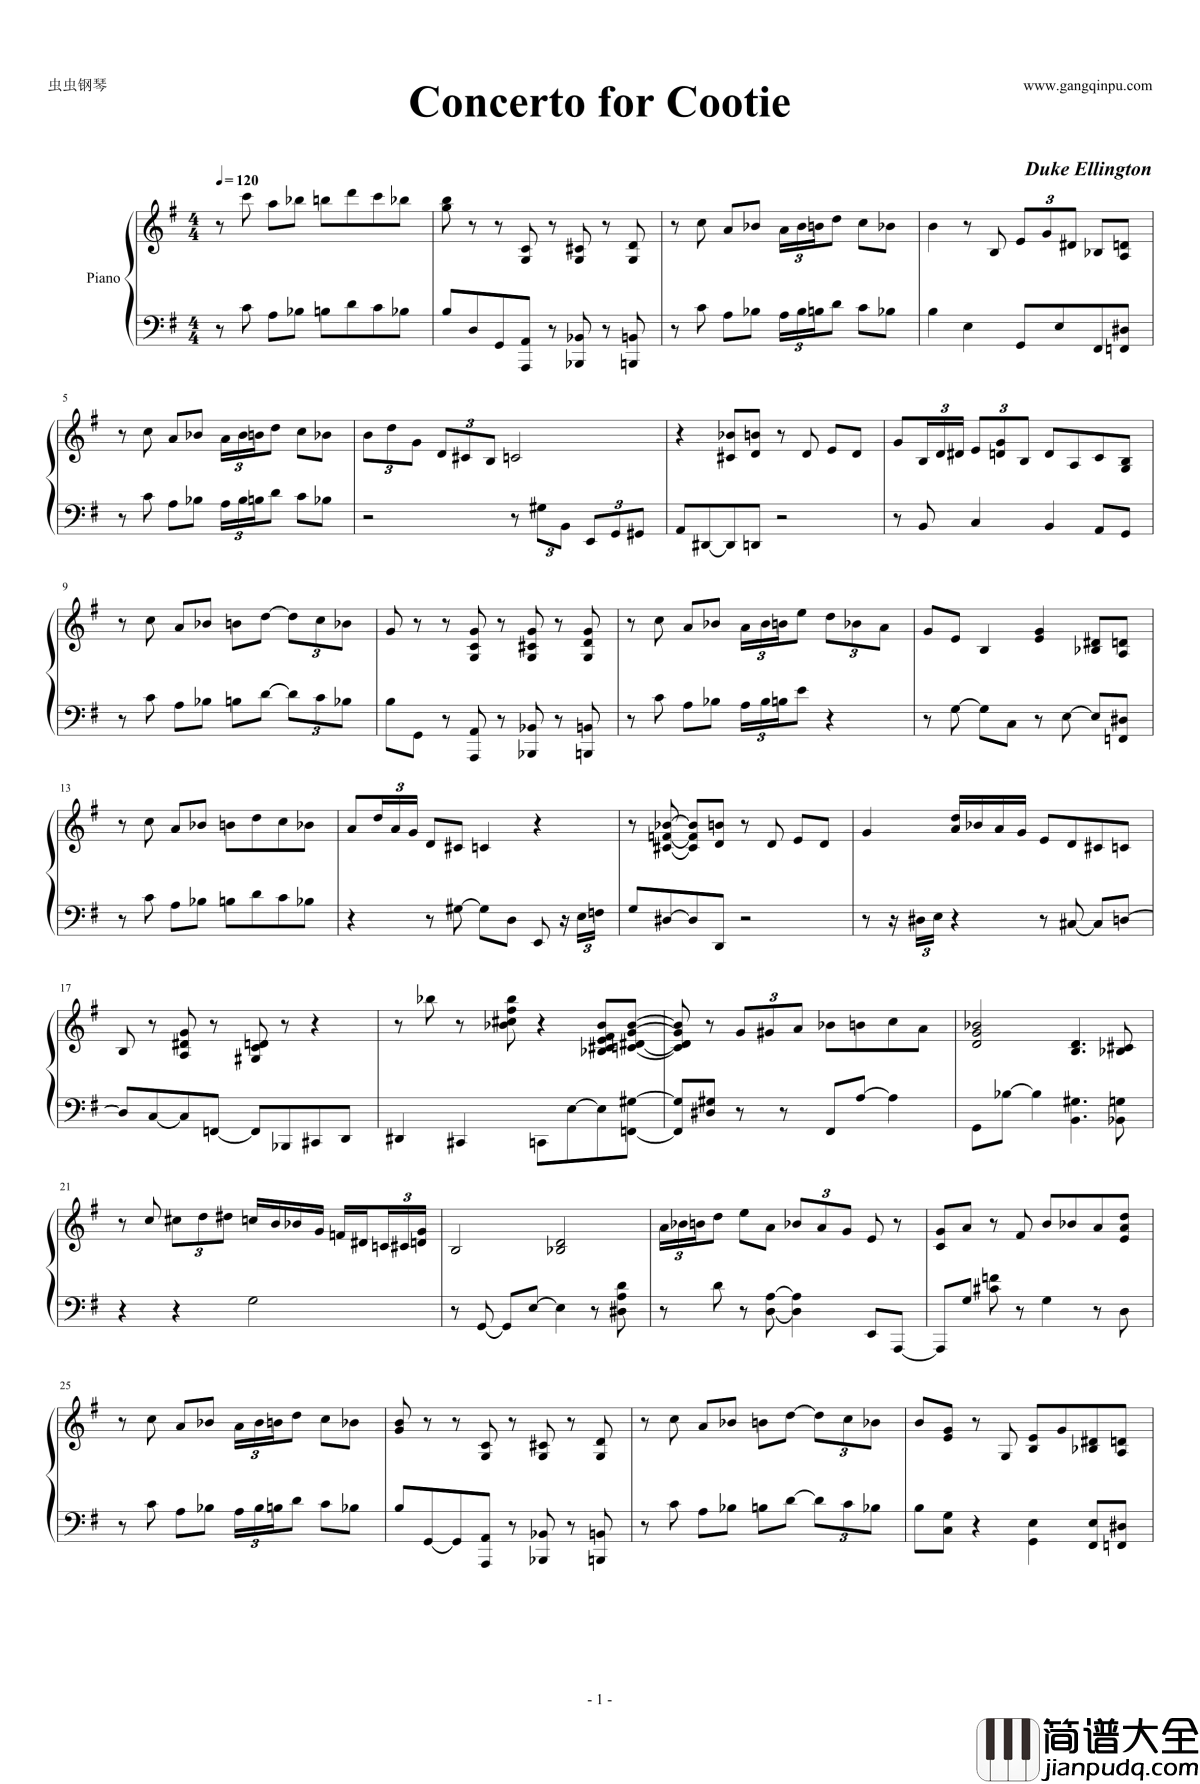 Concerto_for_Cootie钢琴谱_独奏_Duke_Ellington